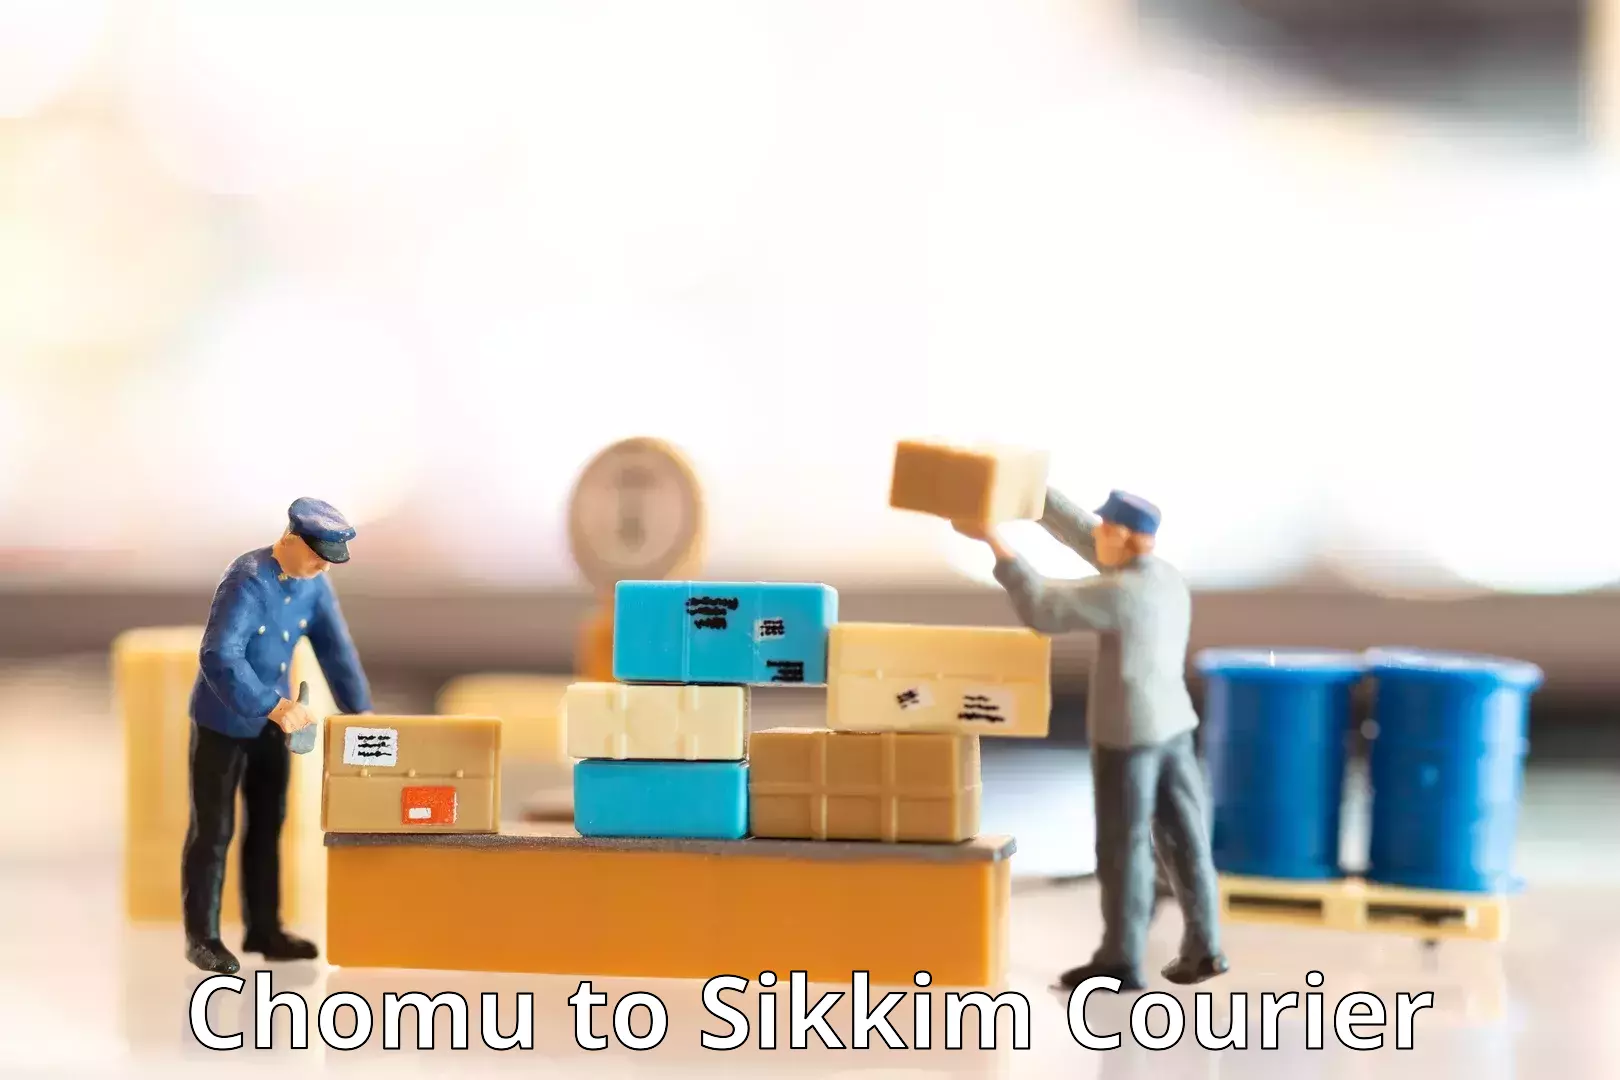 Courier service innovation Chomu to Sikkim